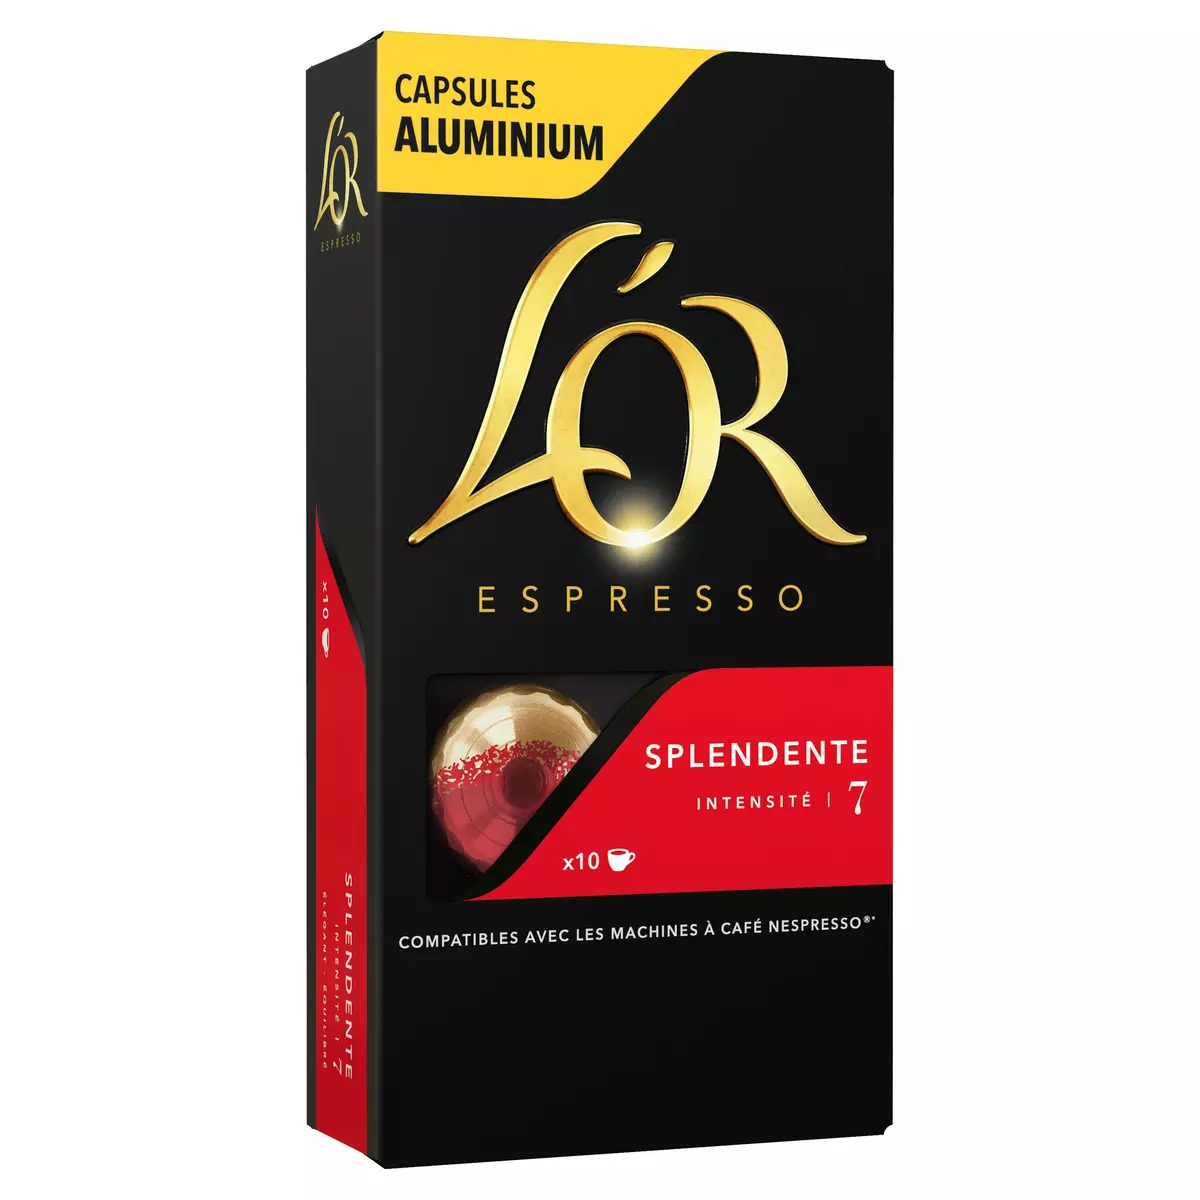 L'OR Capsules de café splendente intensité 7 compatibles Nespresso 10 capsules 52g